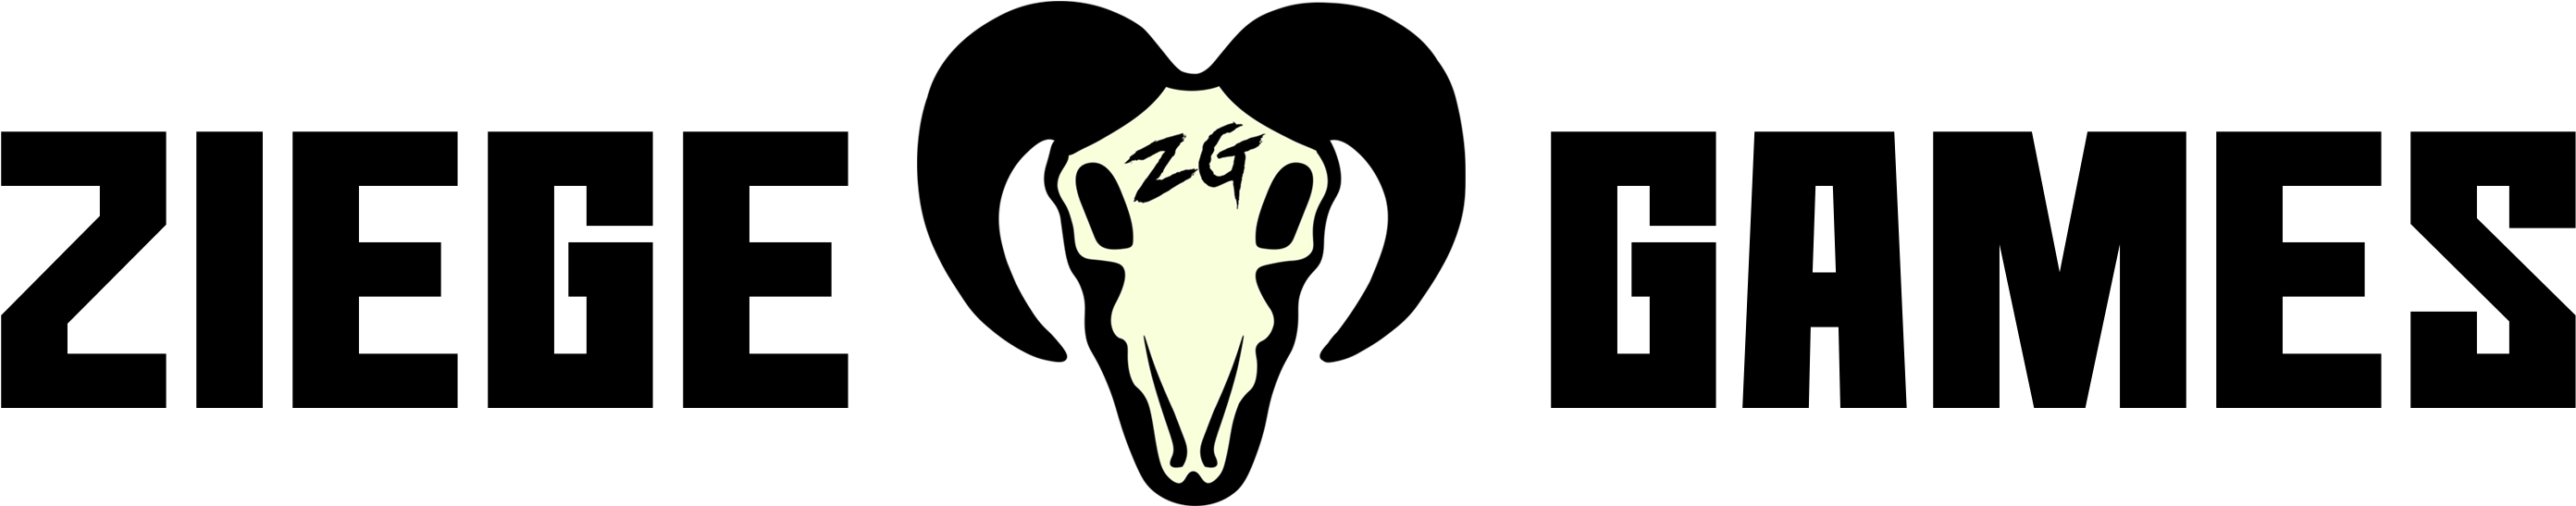 Zg Logo With Text Large - Si Vienes Juégate La Vida (2970x686), Png Download